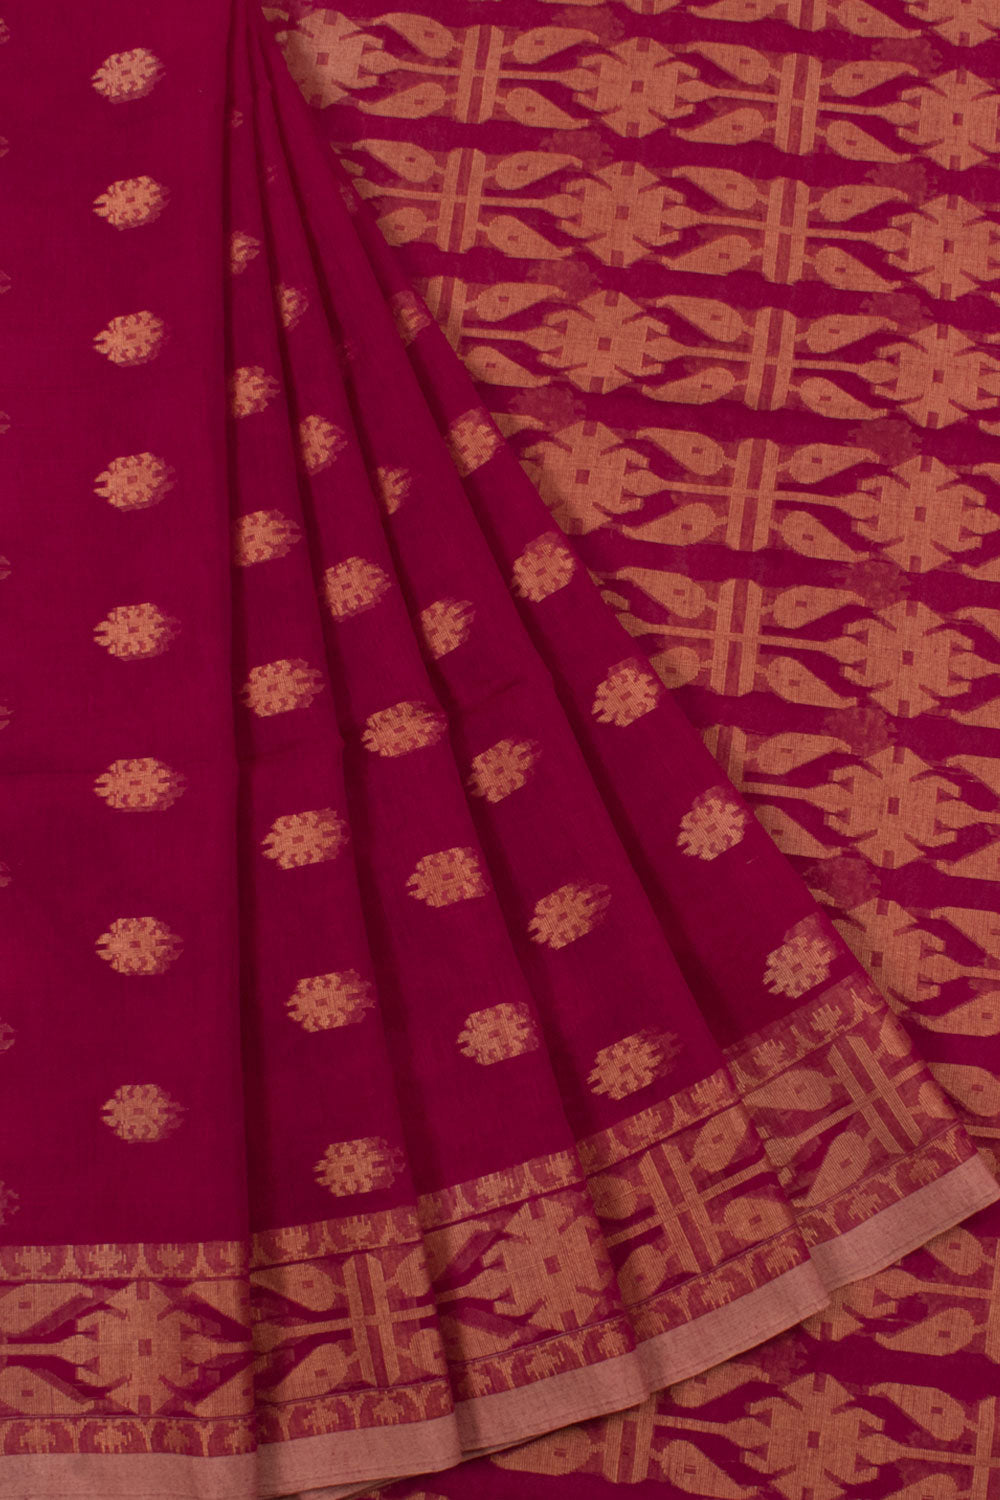 Handloom Jamdani Cotton Saree with Floral, Geometric Design